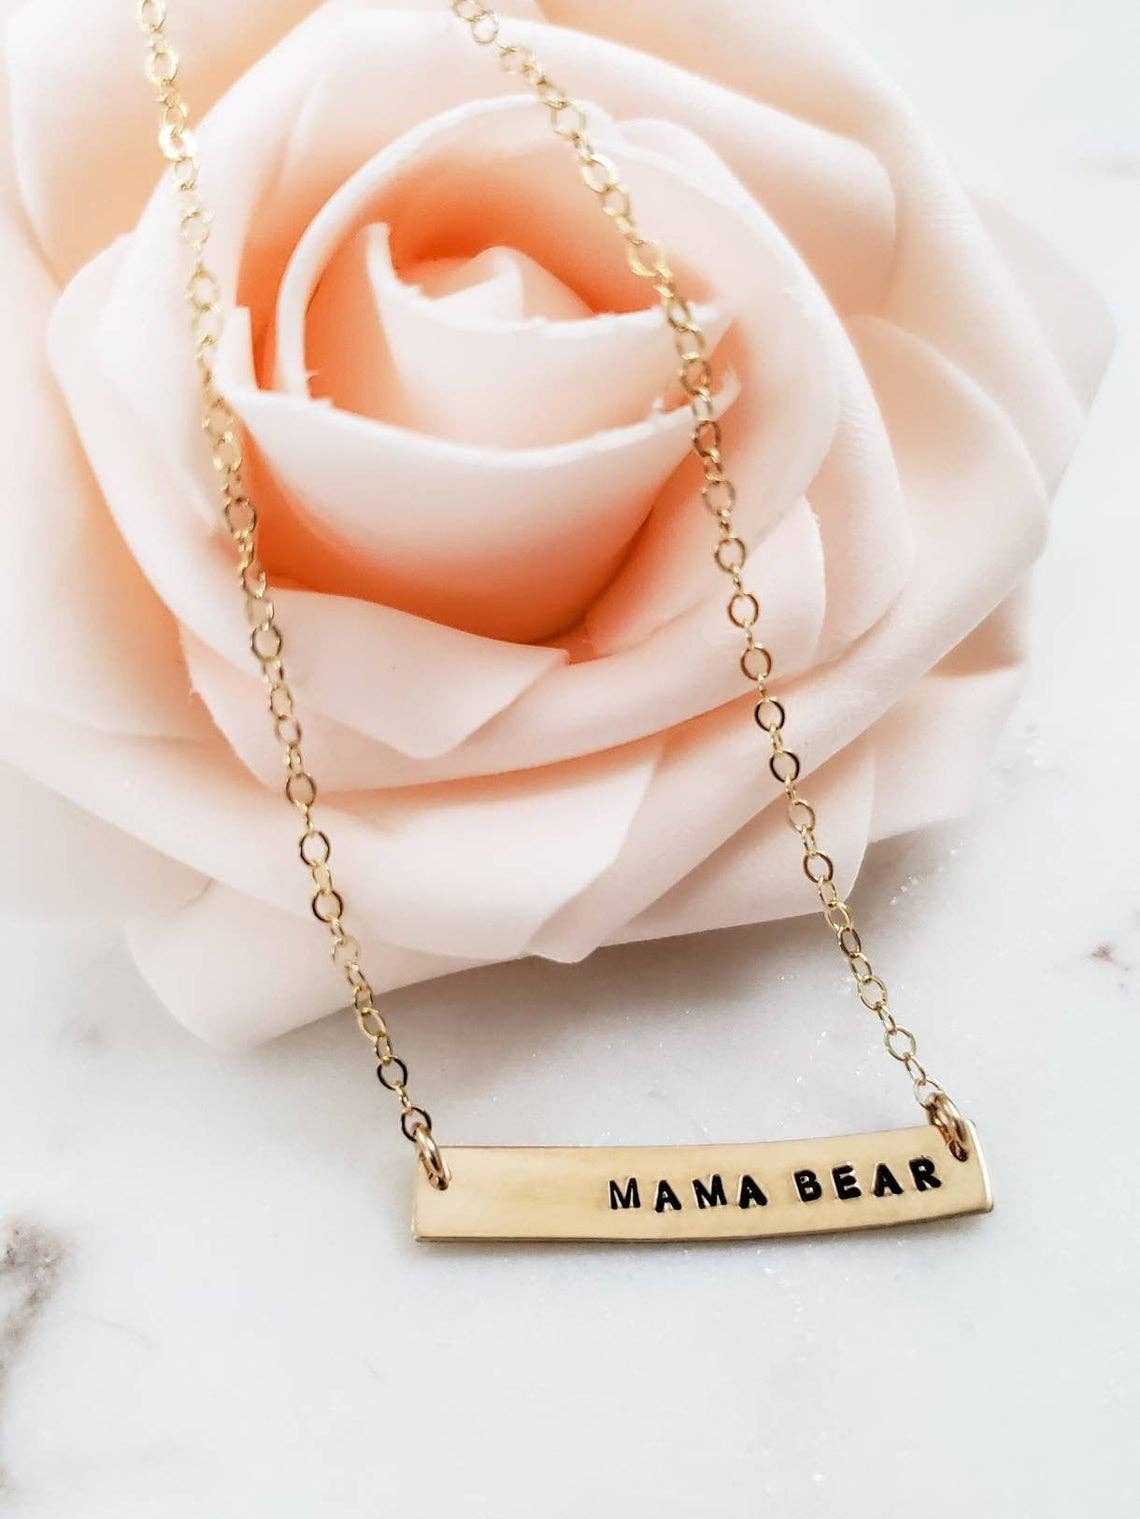 Mama Bear Bar Necklace Gold Chain Pendant Three 3 Cub Jewelry | eBay